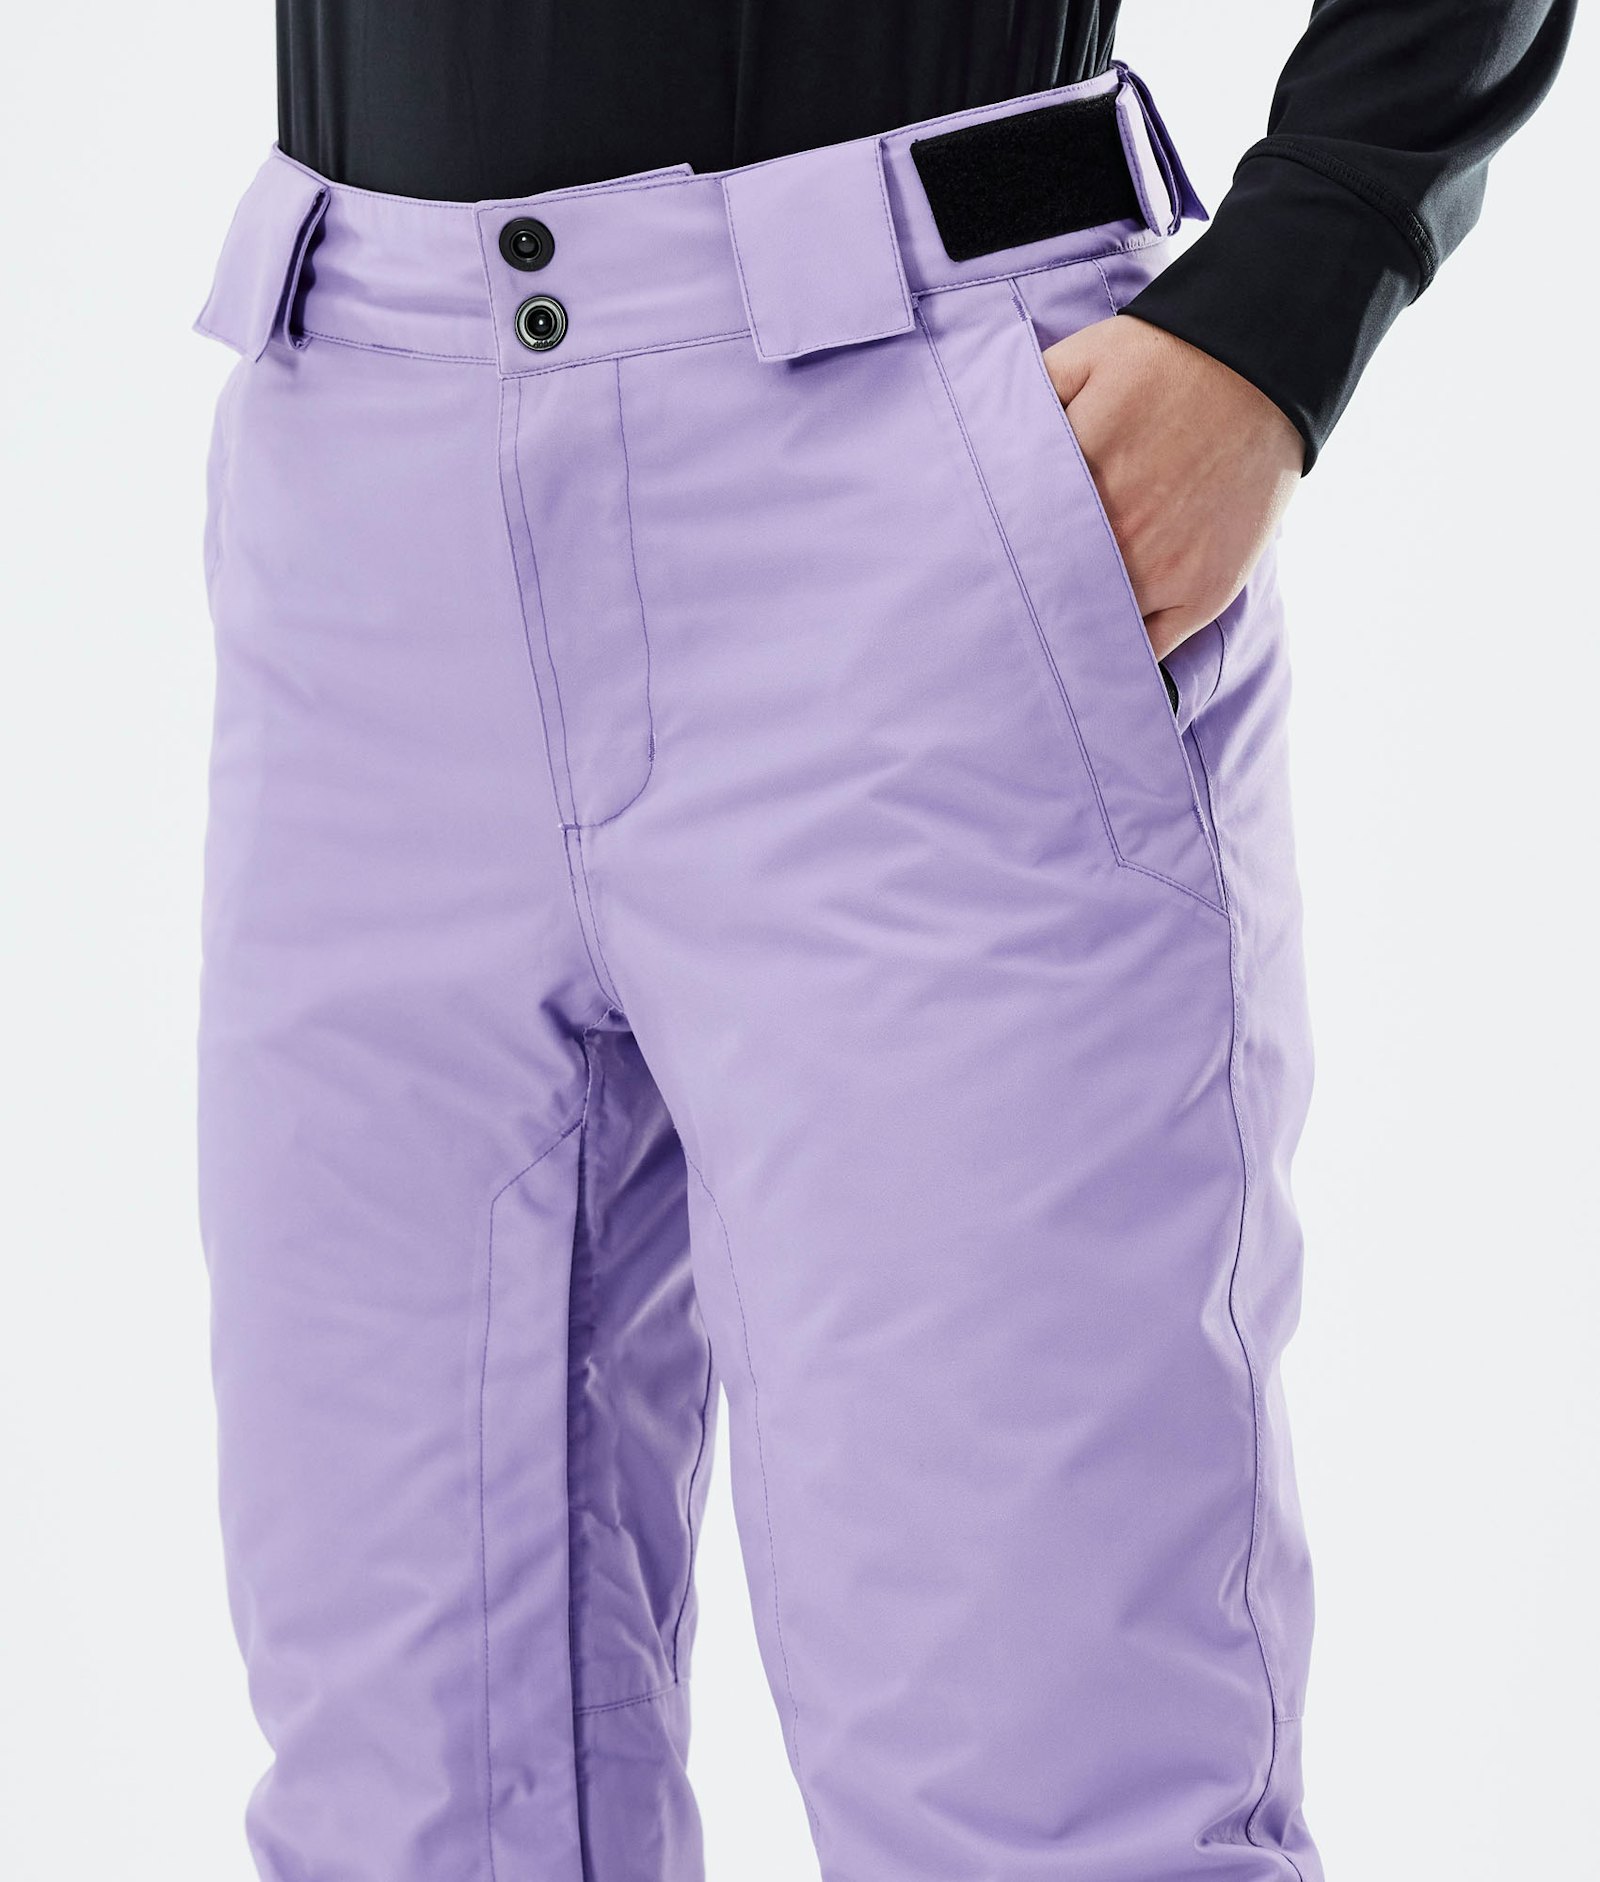 Dope Con W 2021 Snowboard Pants Women Faded Violet